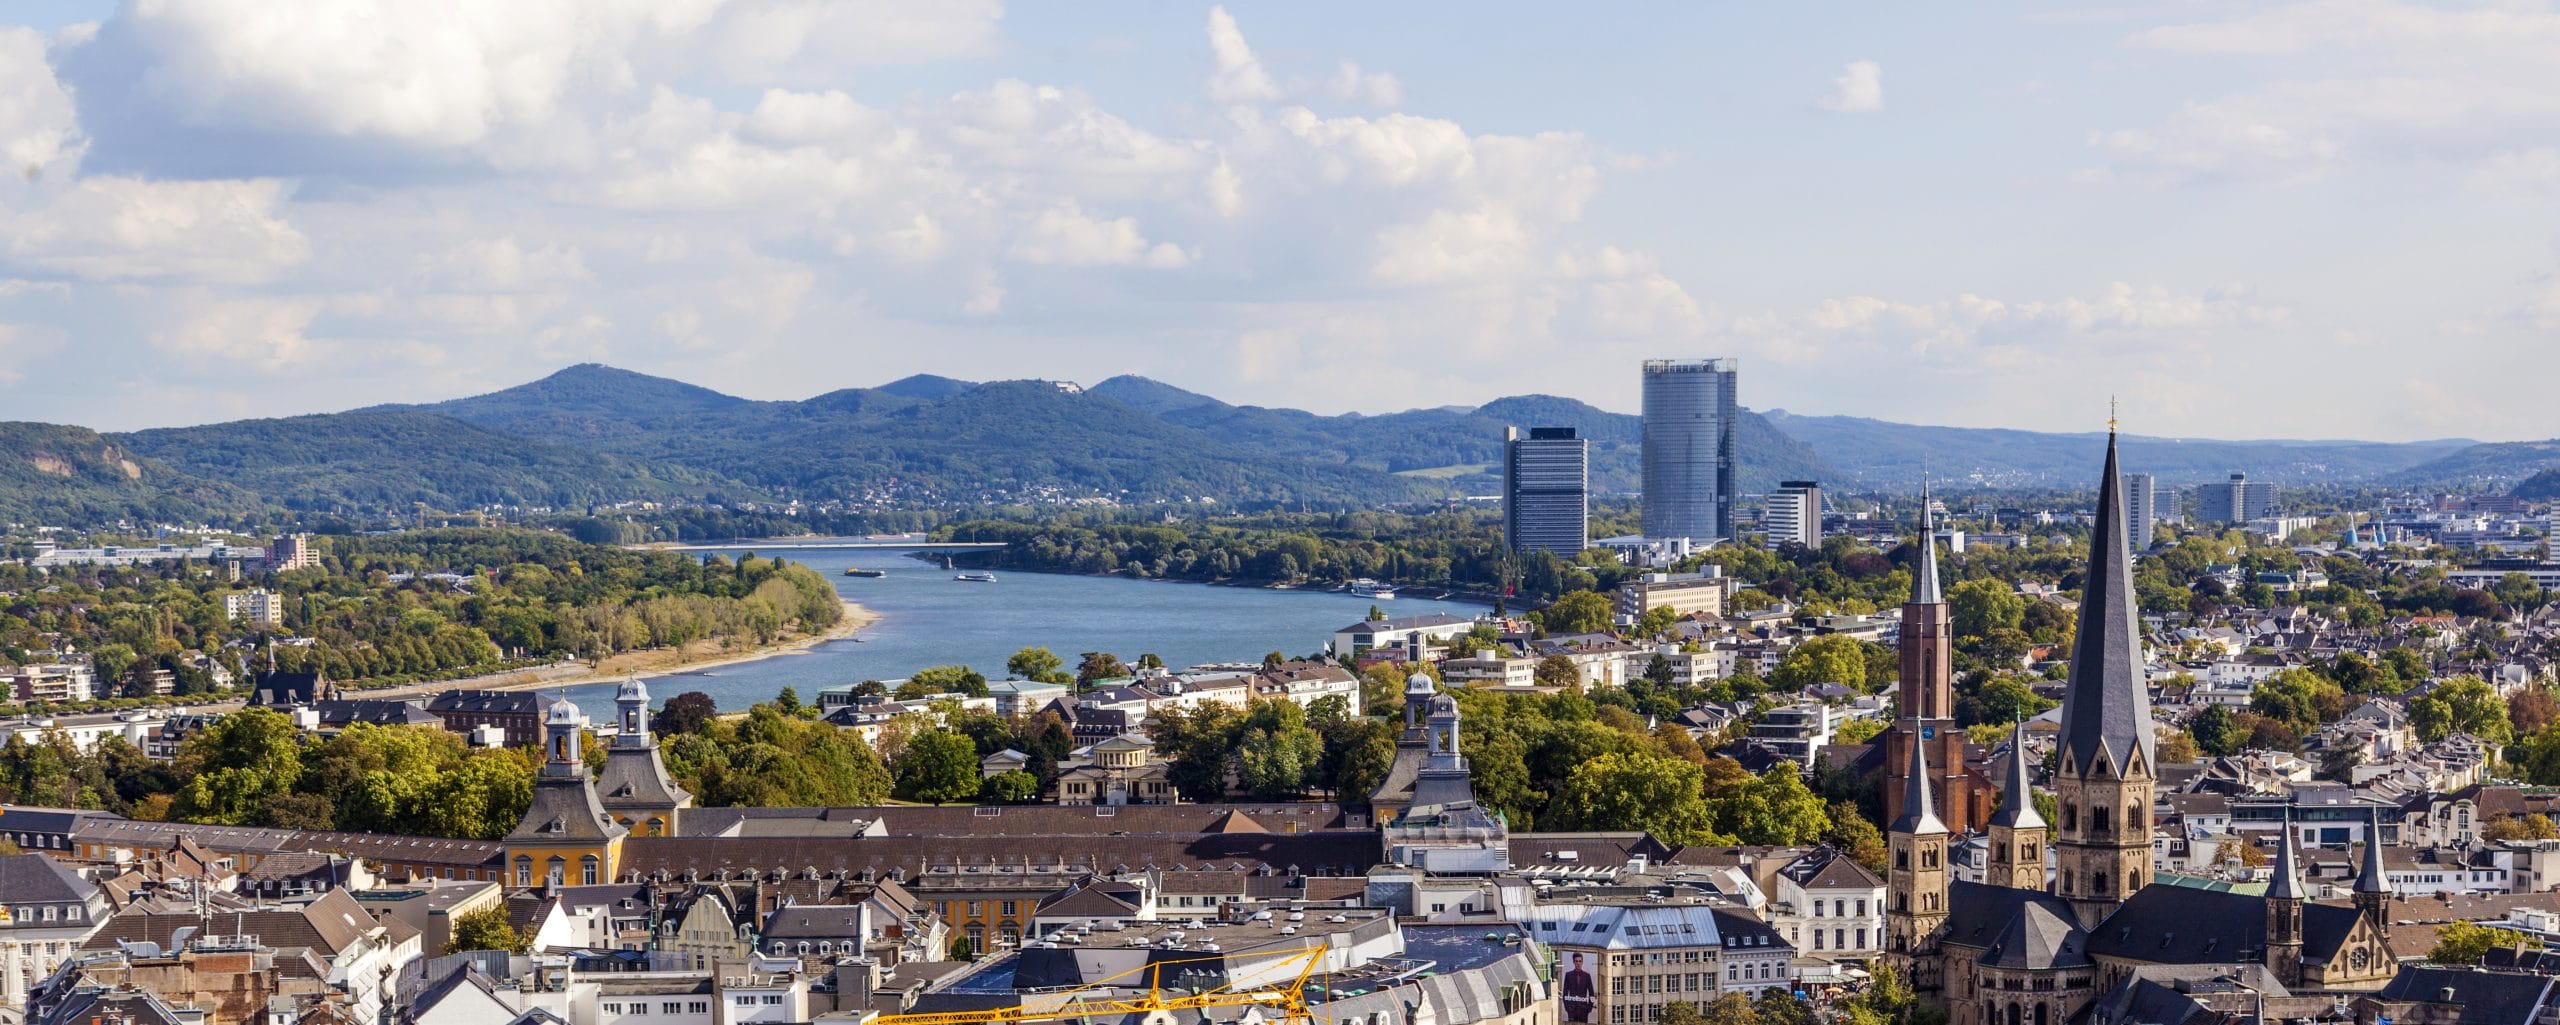 Mehrfamilienhaus Bonn verkaufen